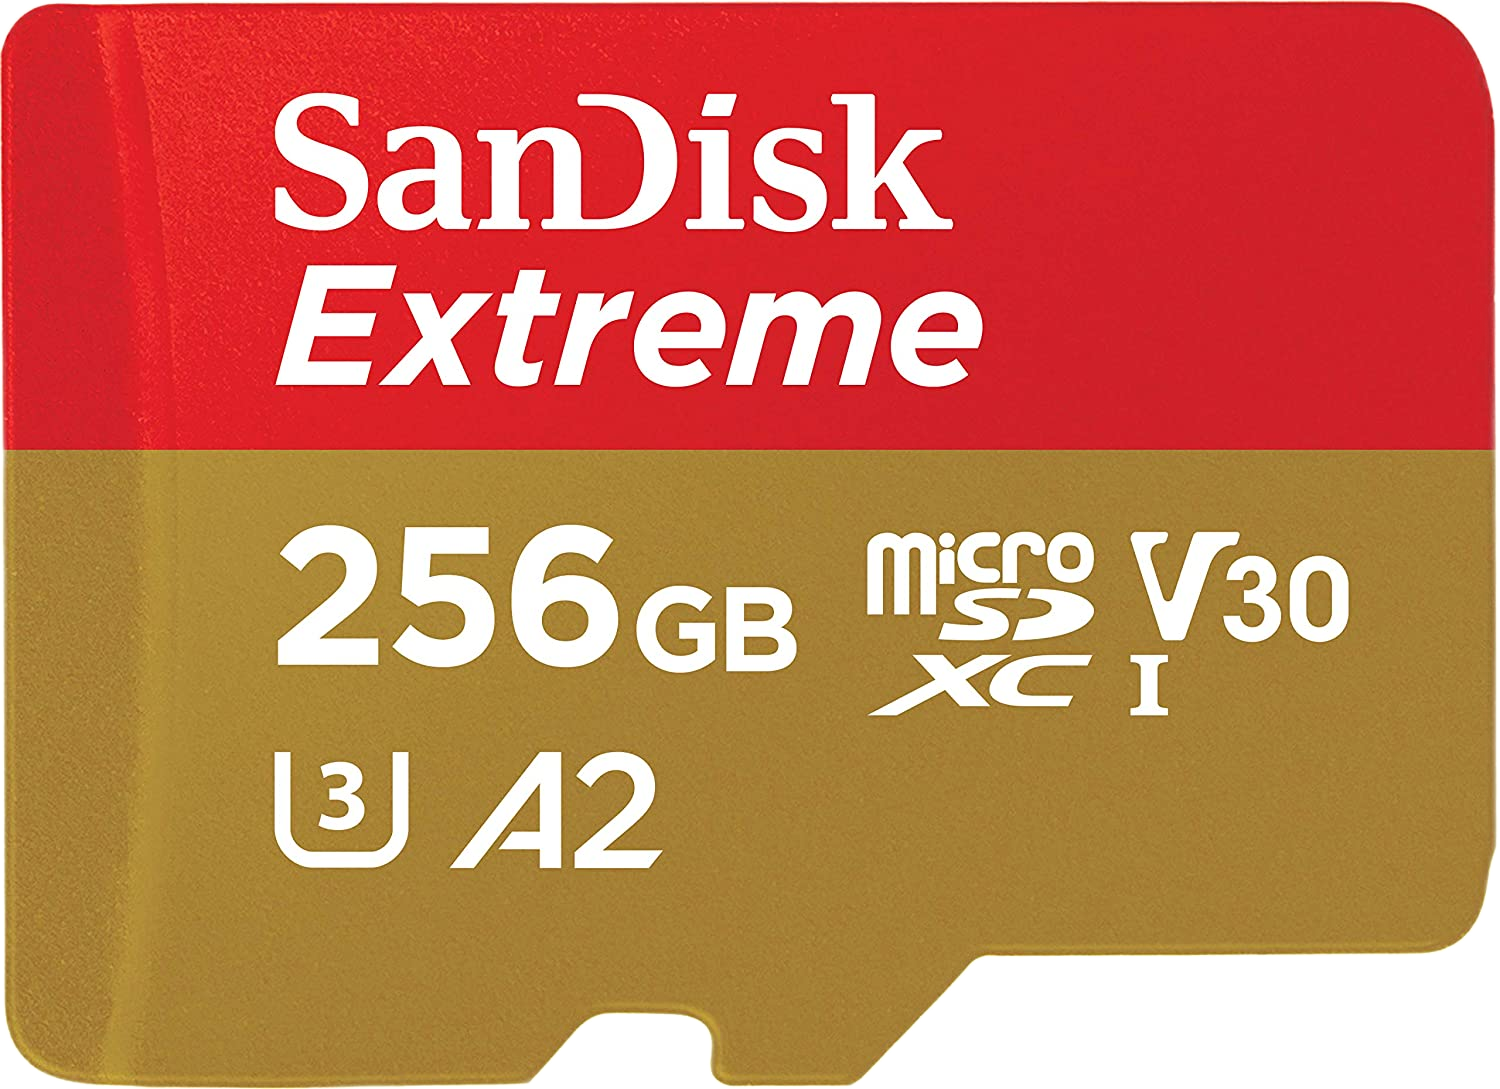 sandisk-extreme-microsd-card